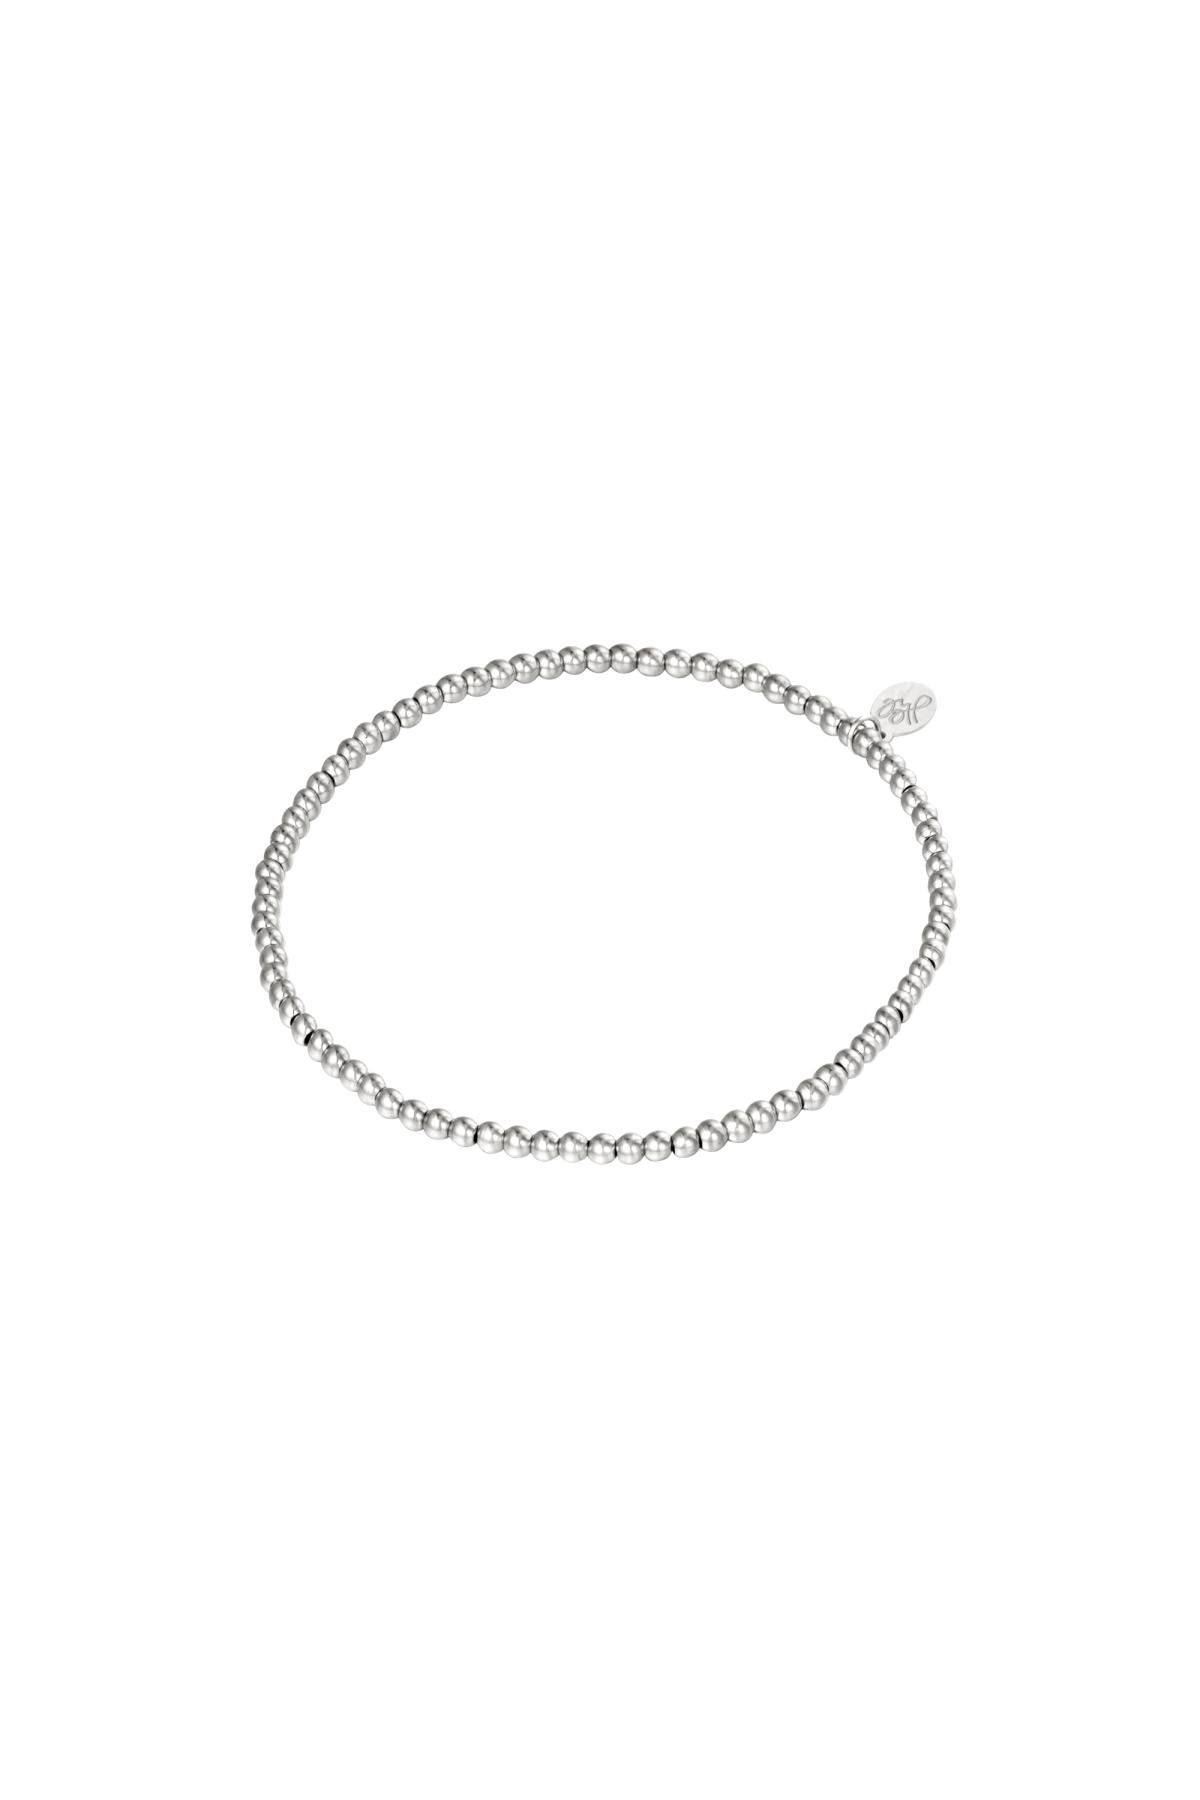 Bracelet Petites Perles Argent Acier Inoxydable-2.5MM